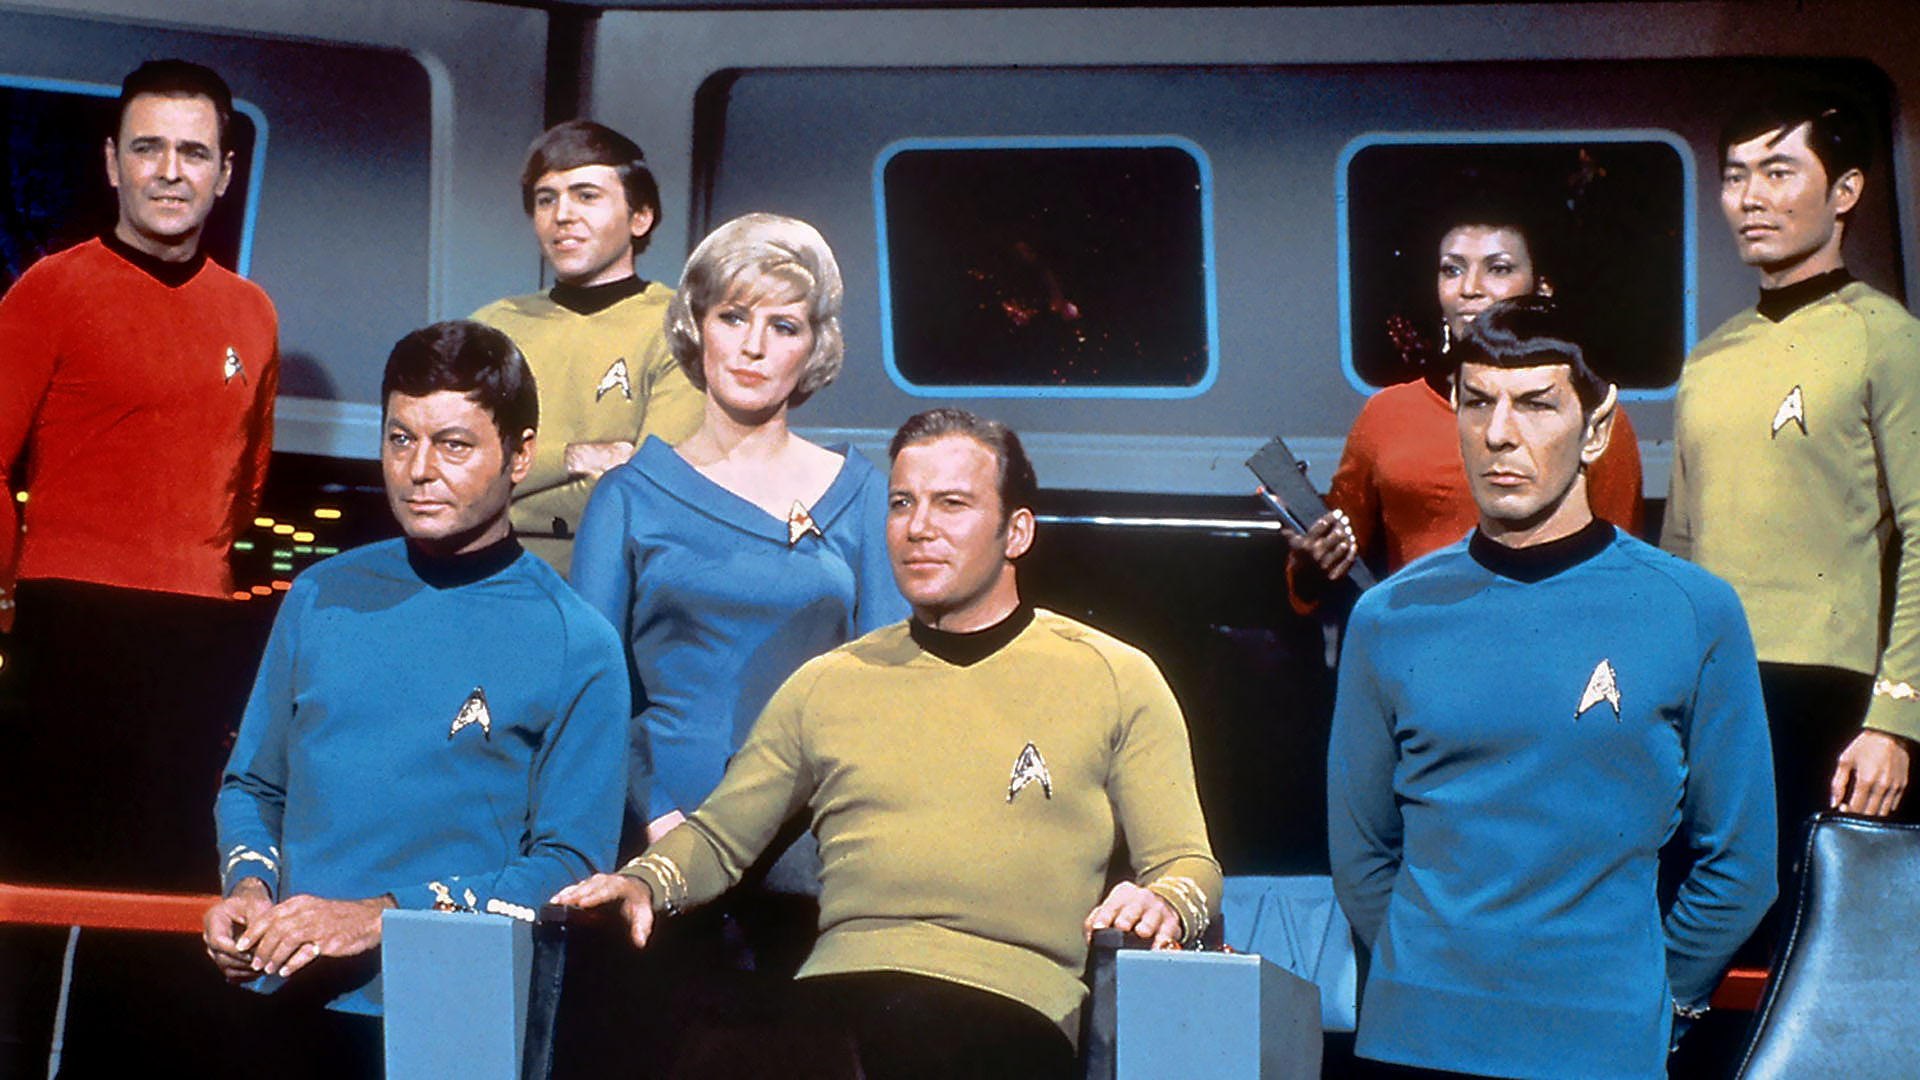 Star Trek:TOS (the original series